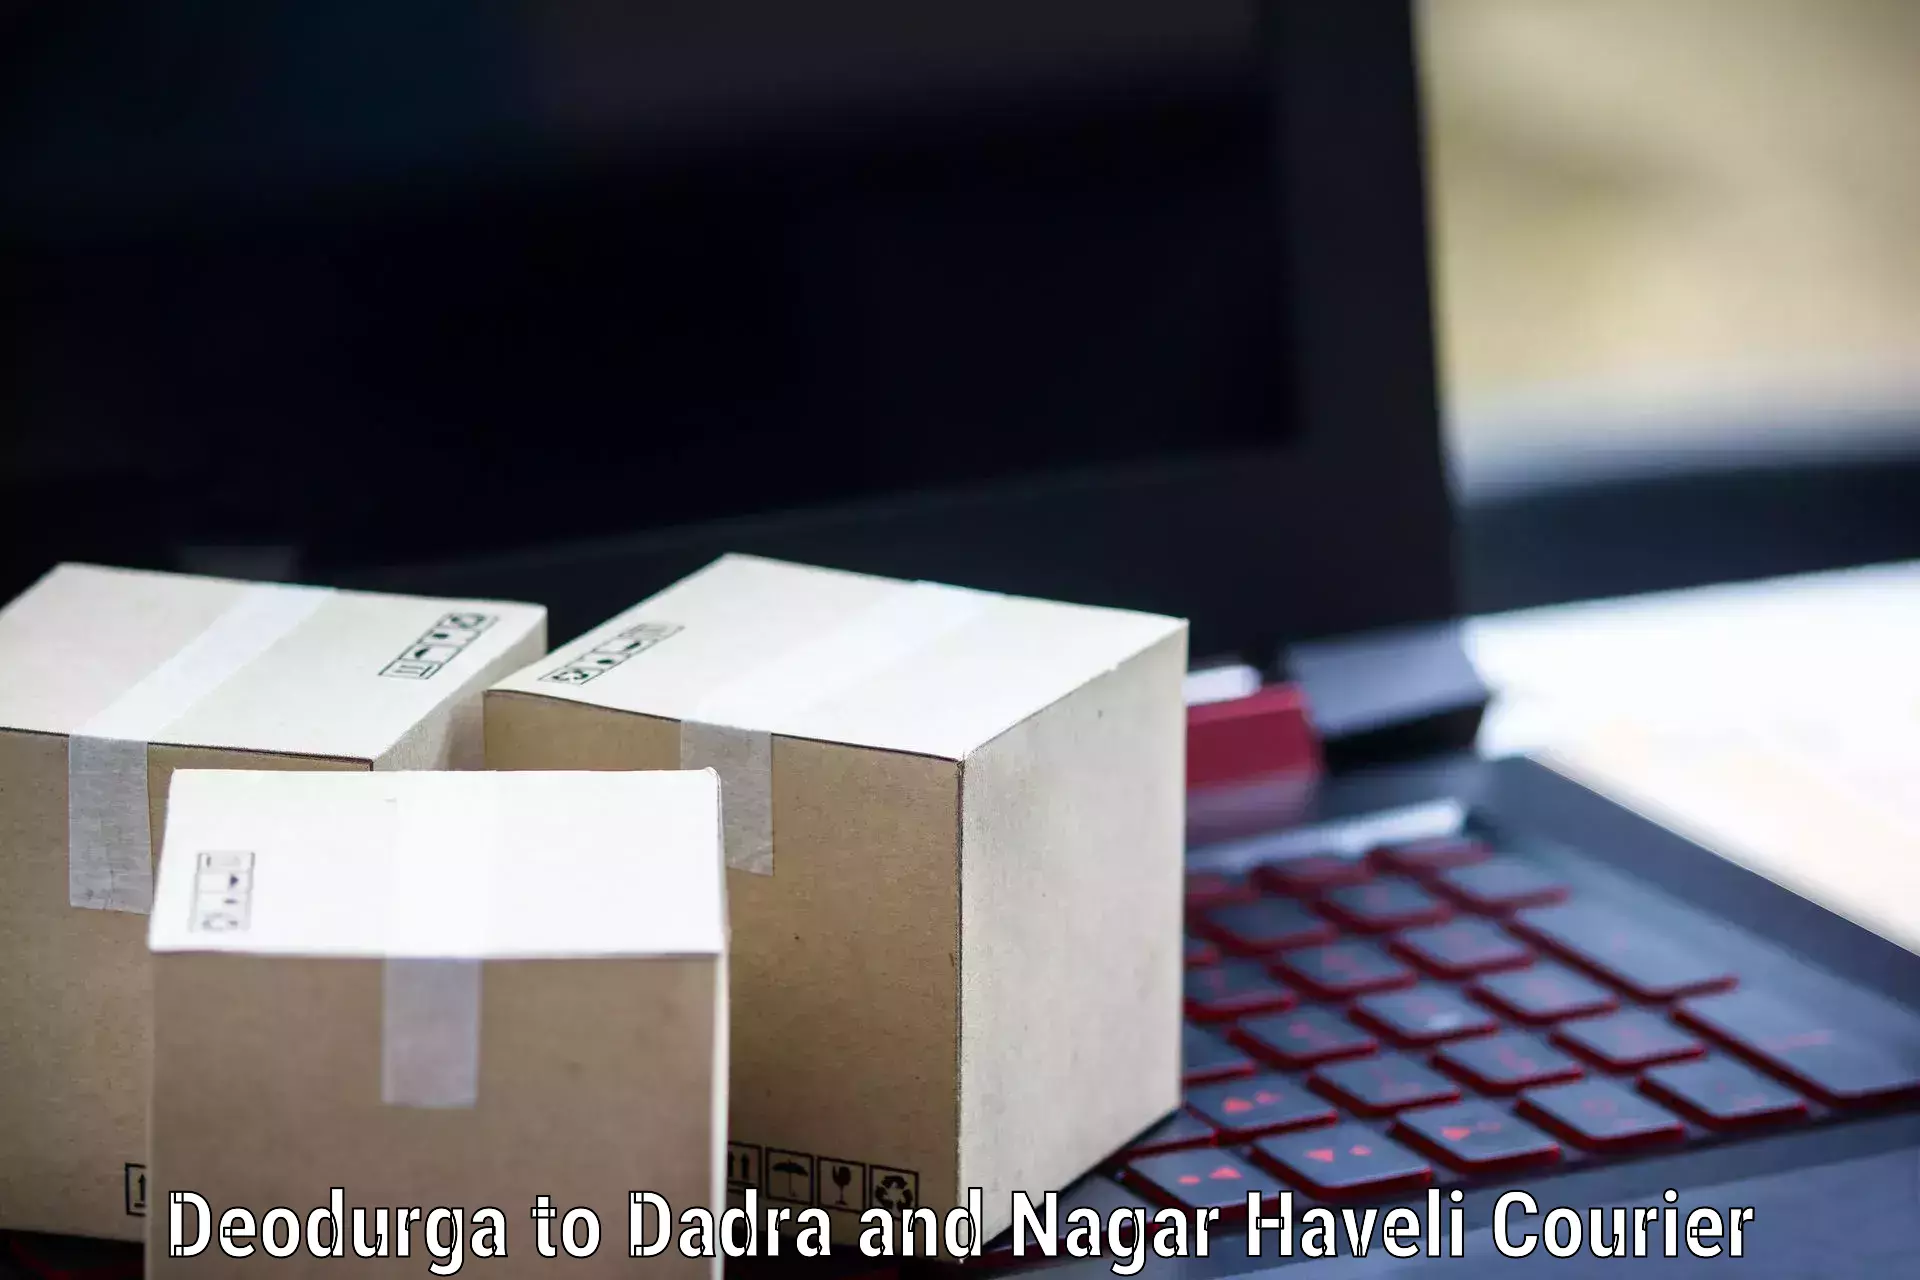 Easy access courier services Deodurga to Dadra and Nagar Haveli